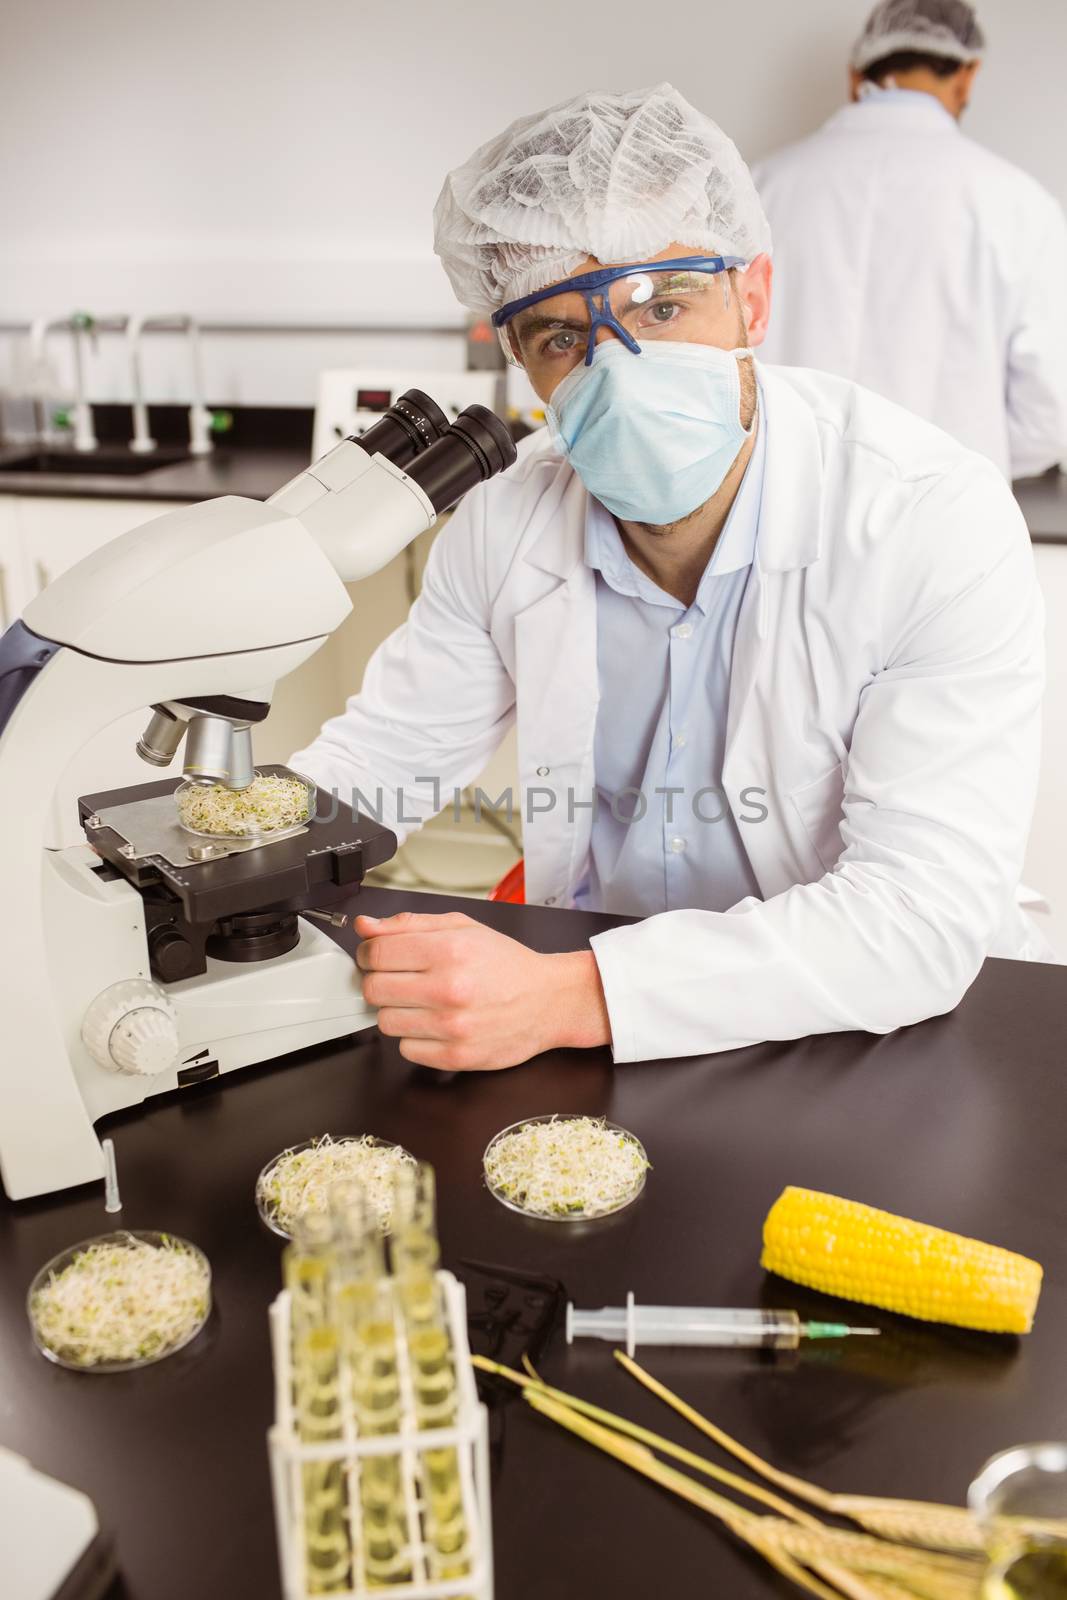 Food scientist looking at petri dish under microscope by Wavebreakmedia